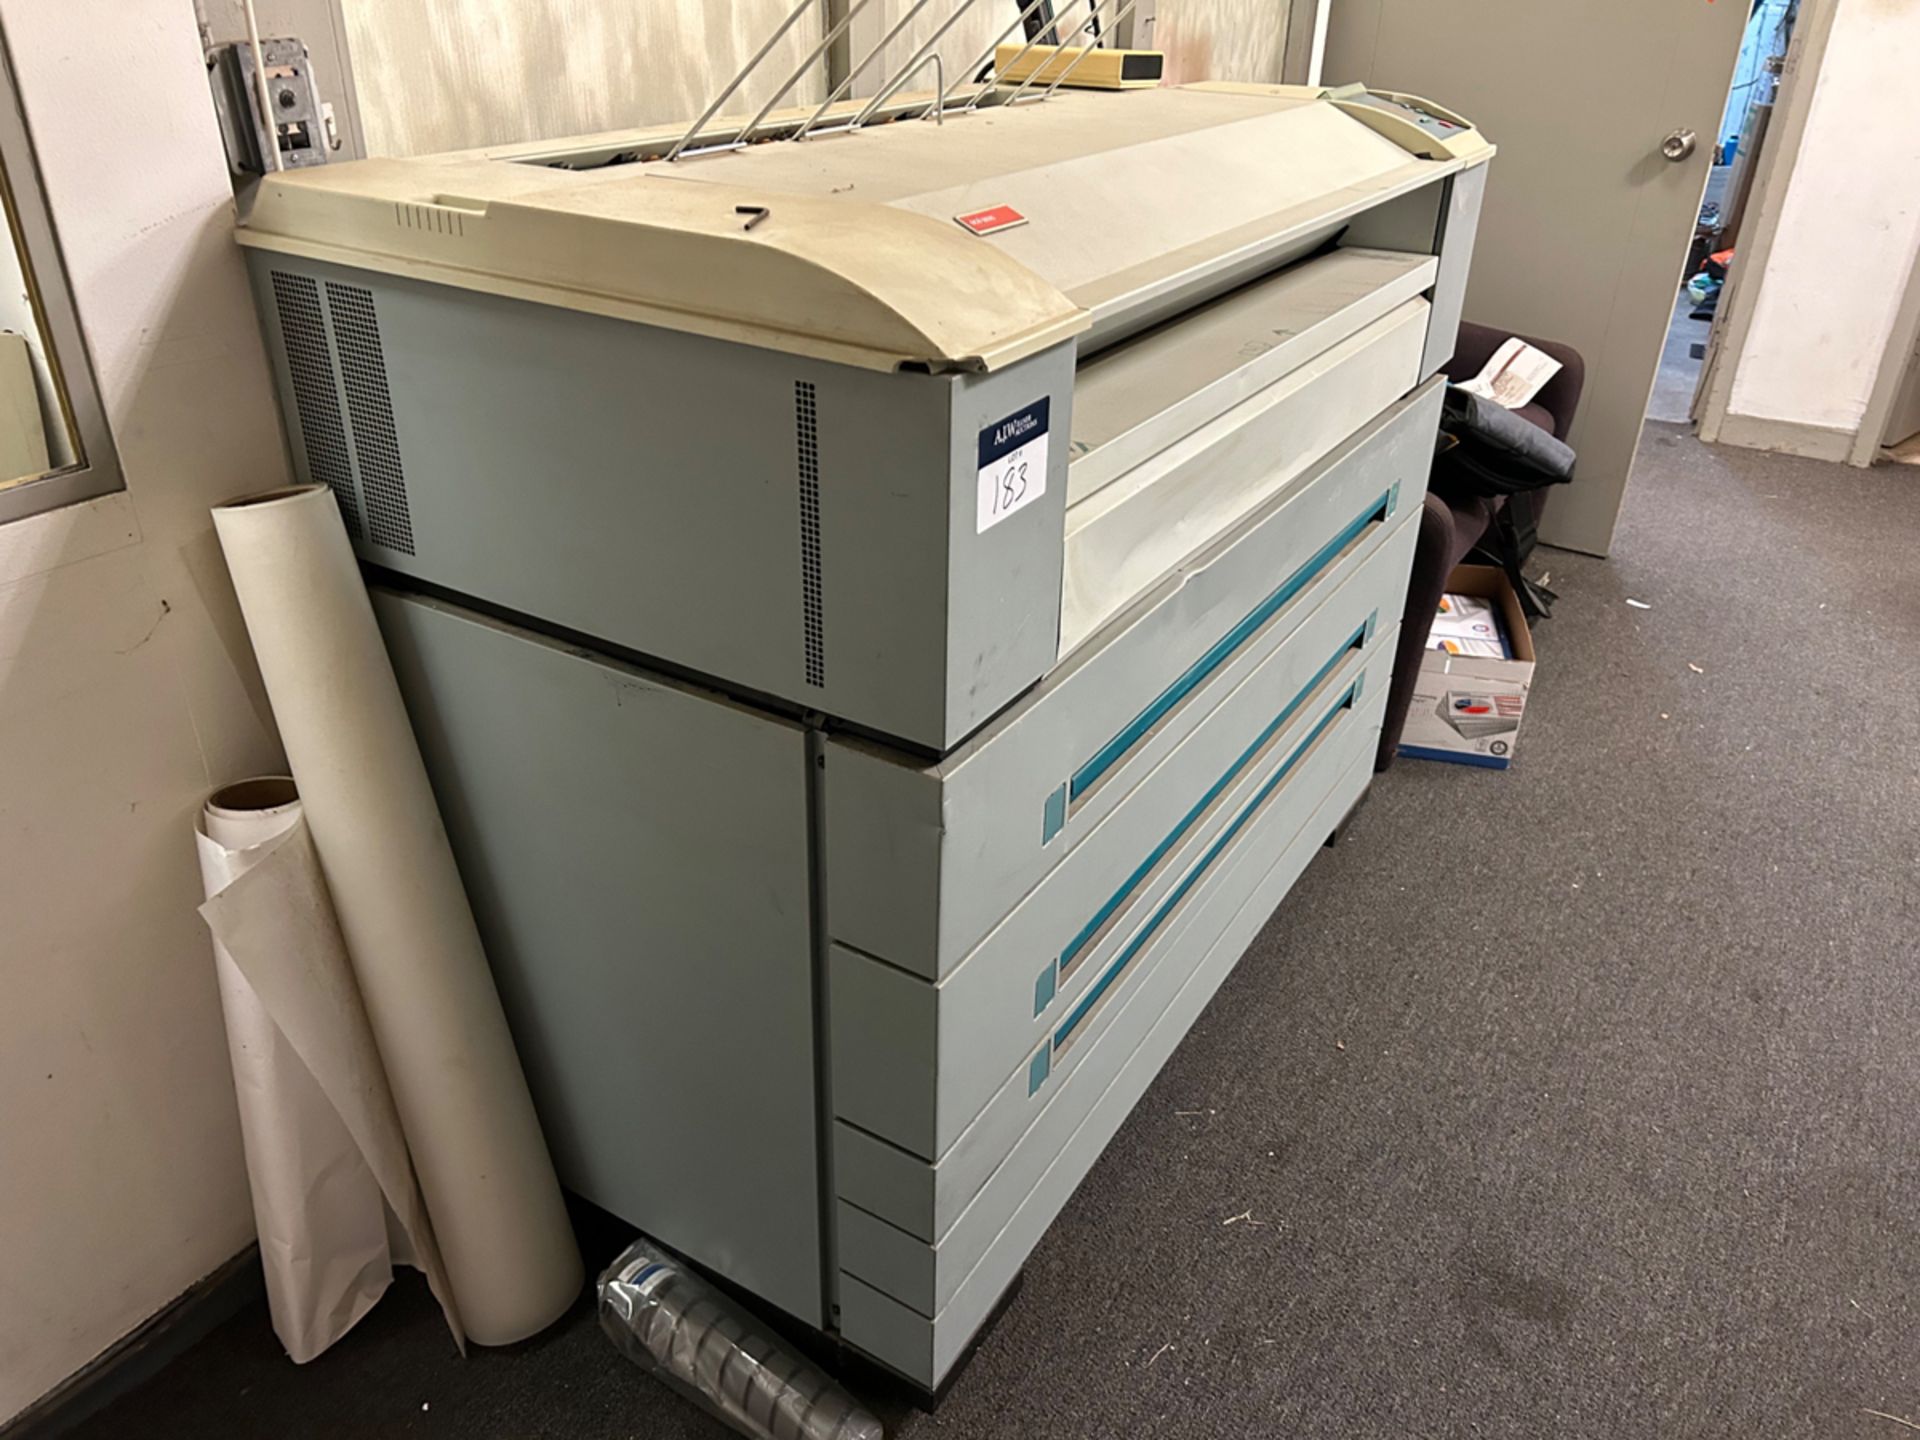 Oce 9600 Commercial Copier/Printer - Image 2 of 5